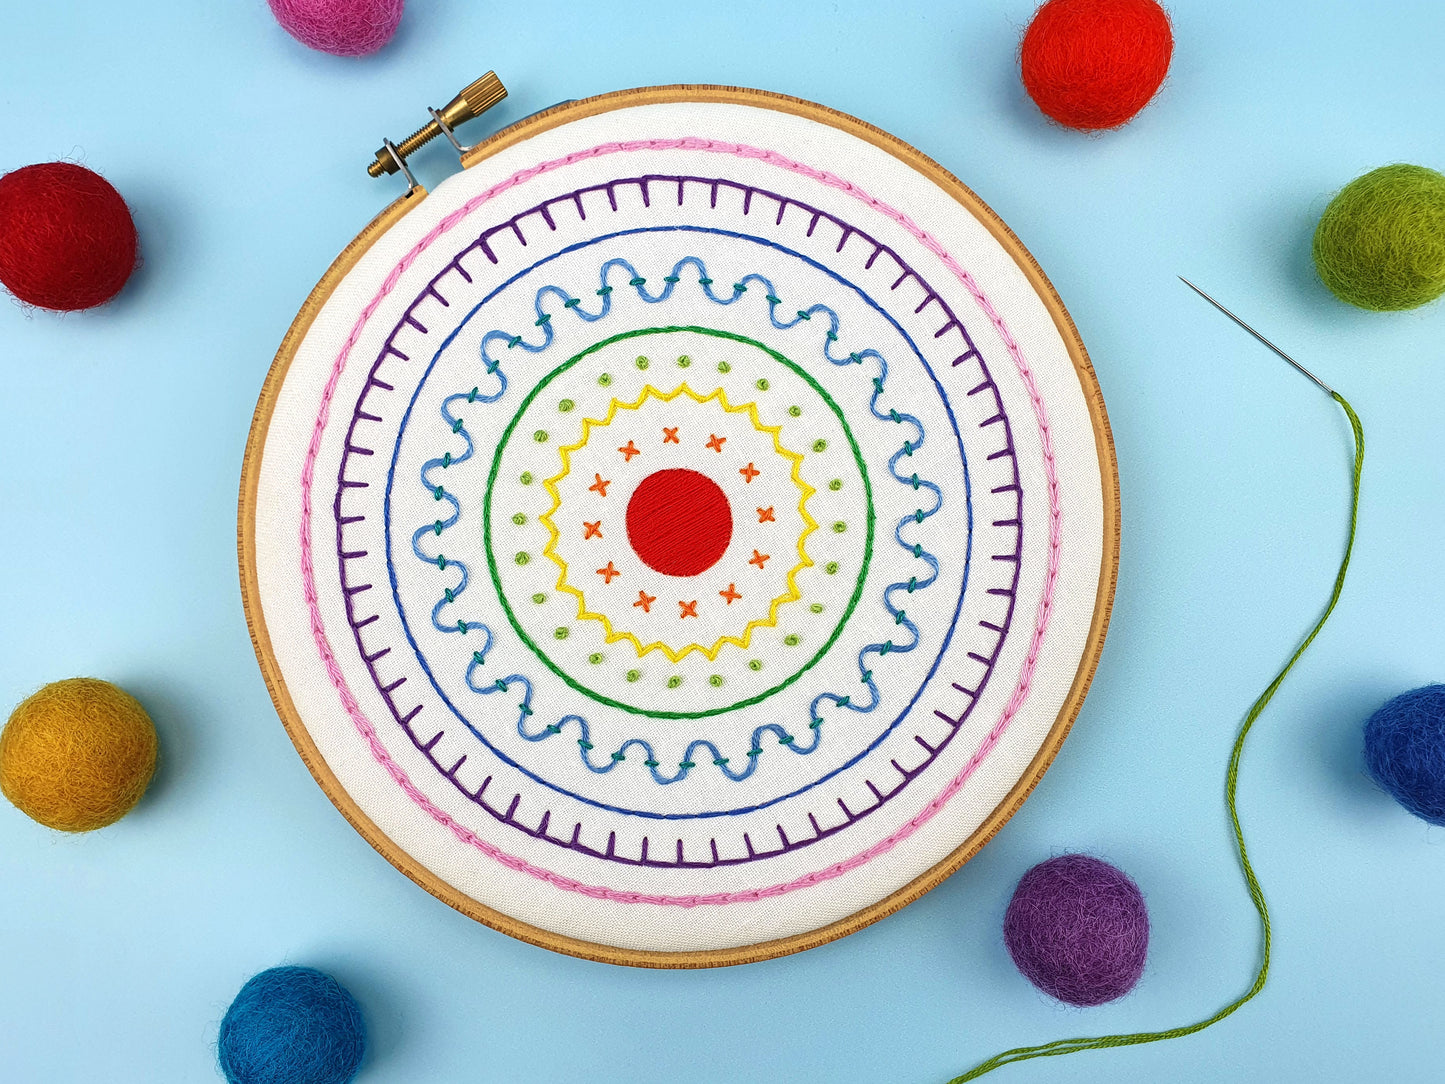 Rainbow Sampler Embroidery Pattern, DIY Embroidery Kit - Fabric Packs - ohsewbootiful